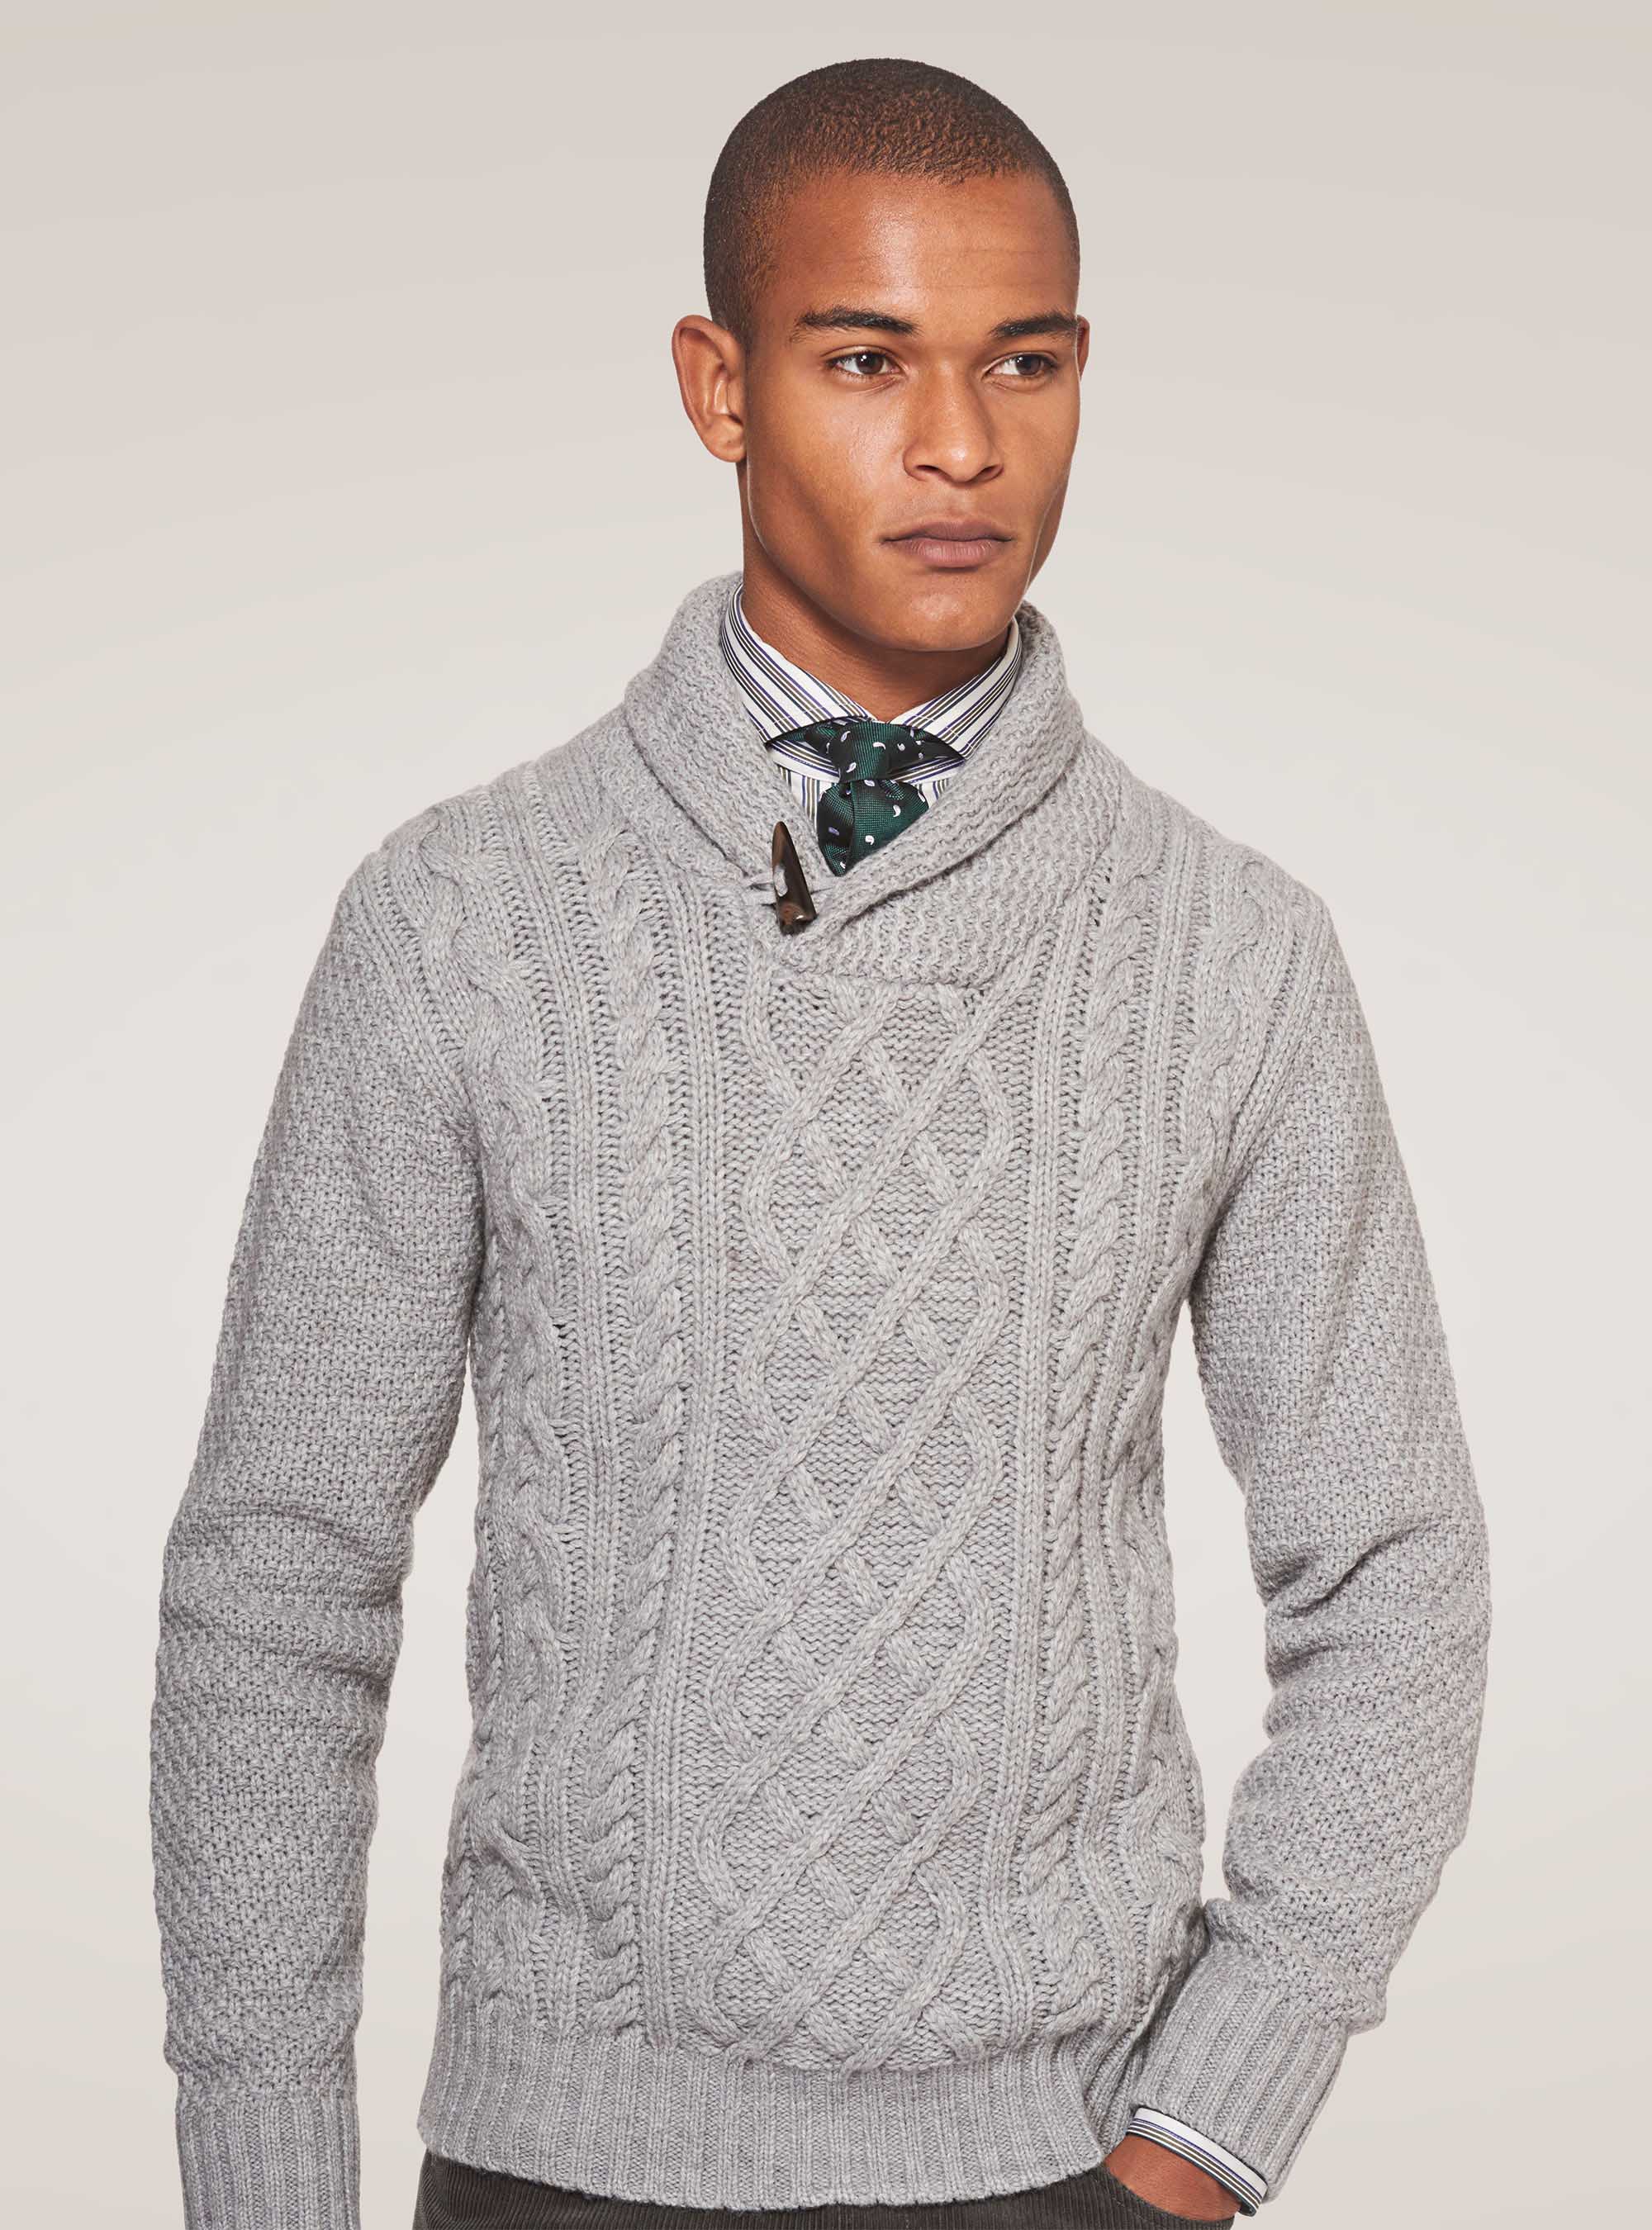 Braided wool high neck sweater with shaw collar | Gutteridge - 94046004